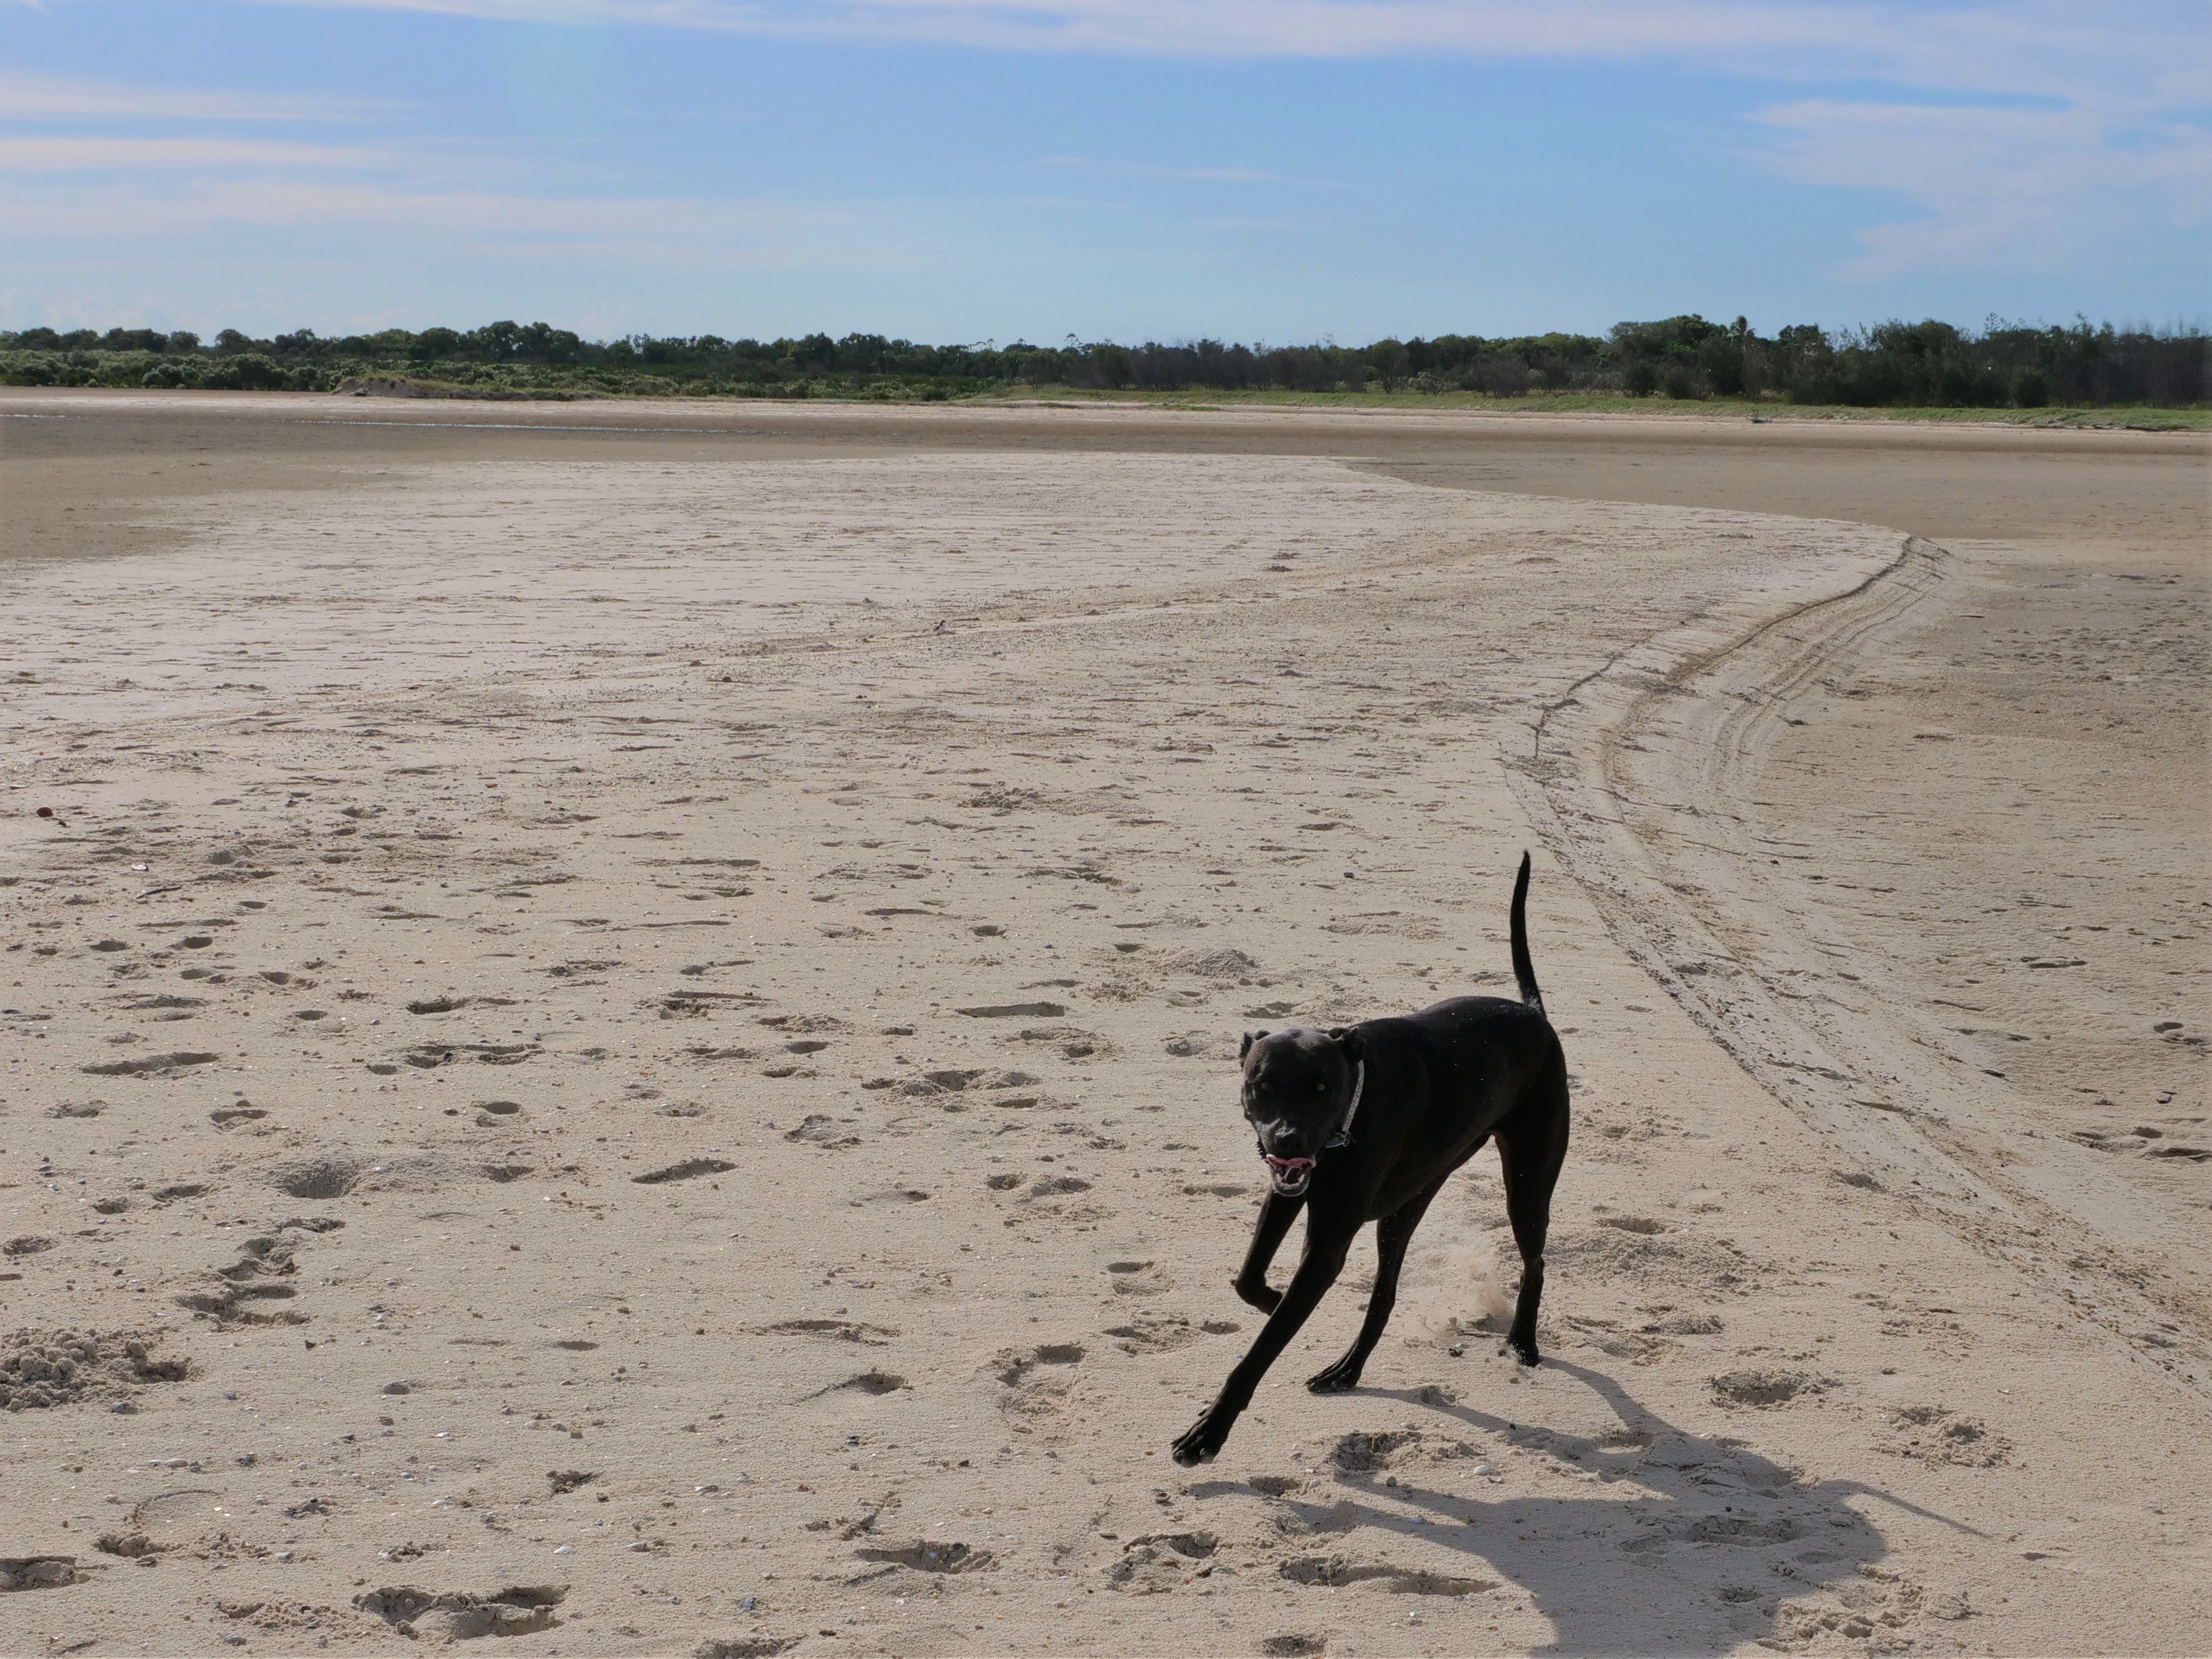 A large, black dog, running free on a sandy stretch.